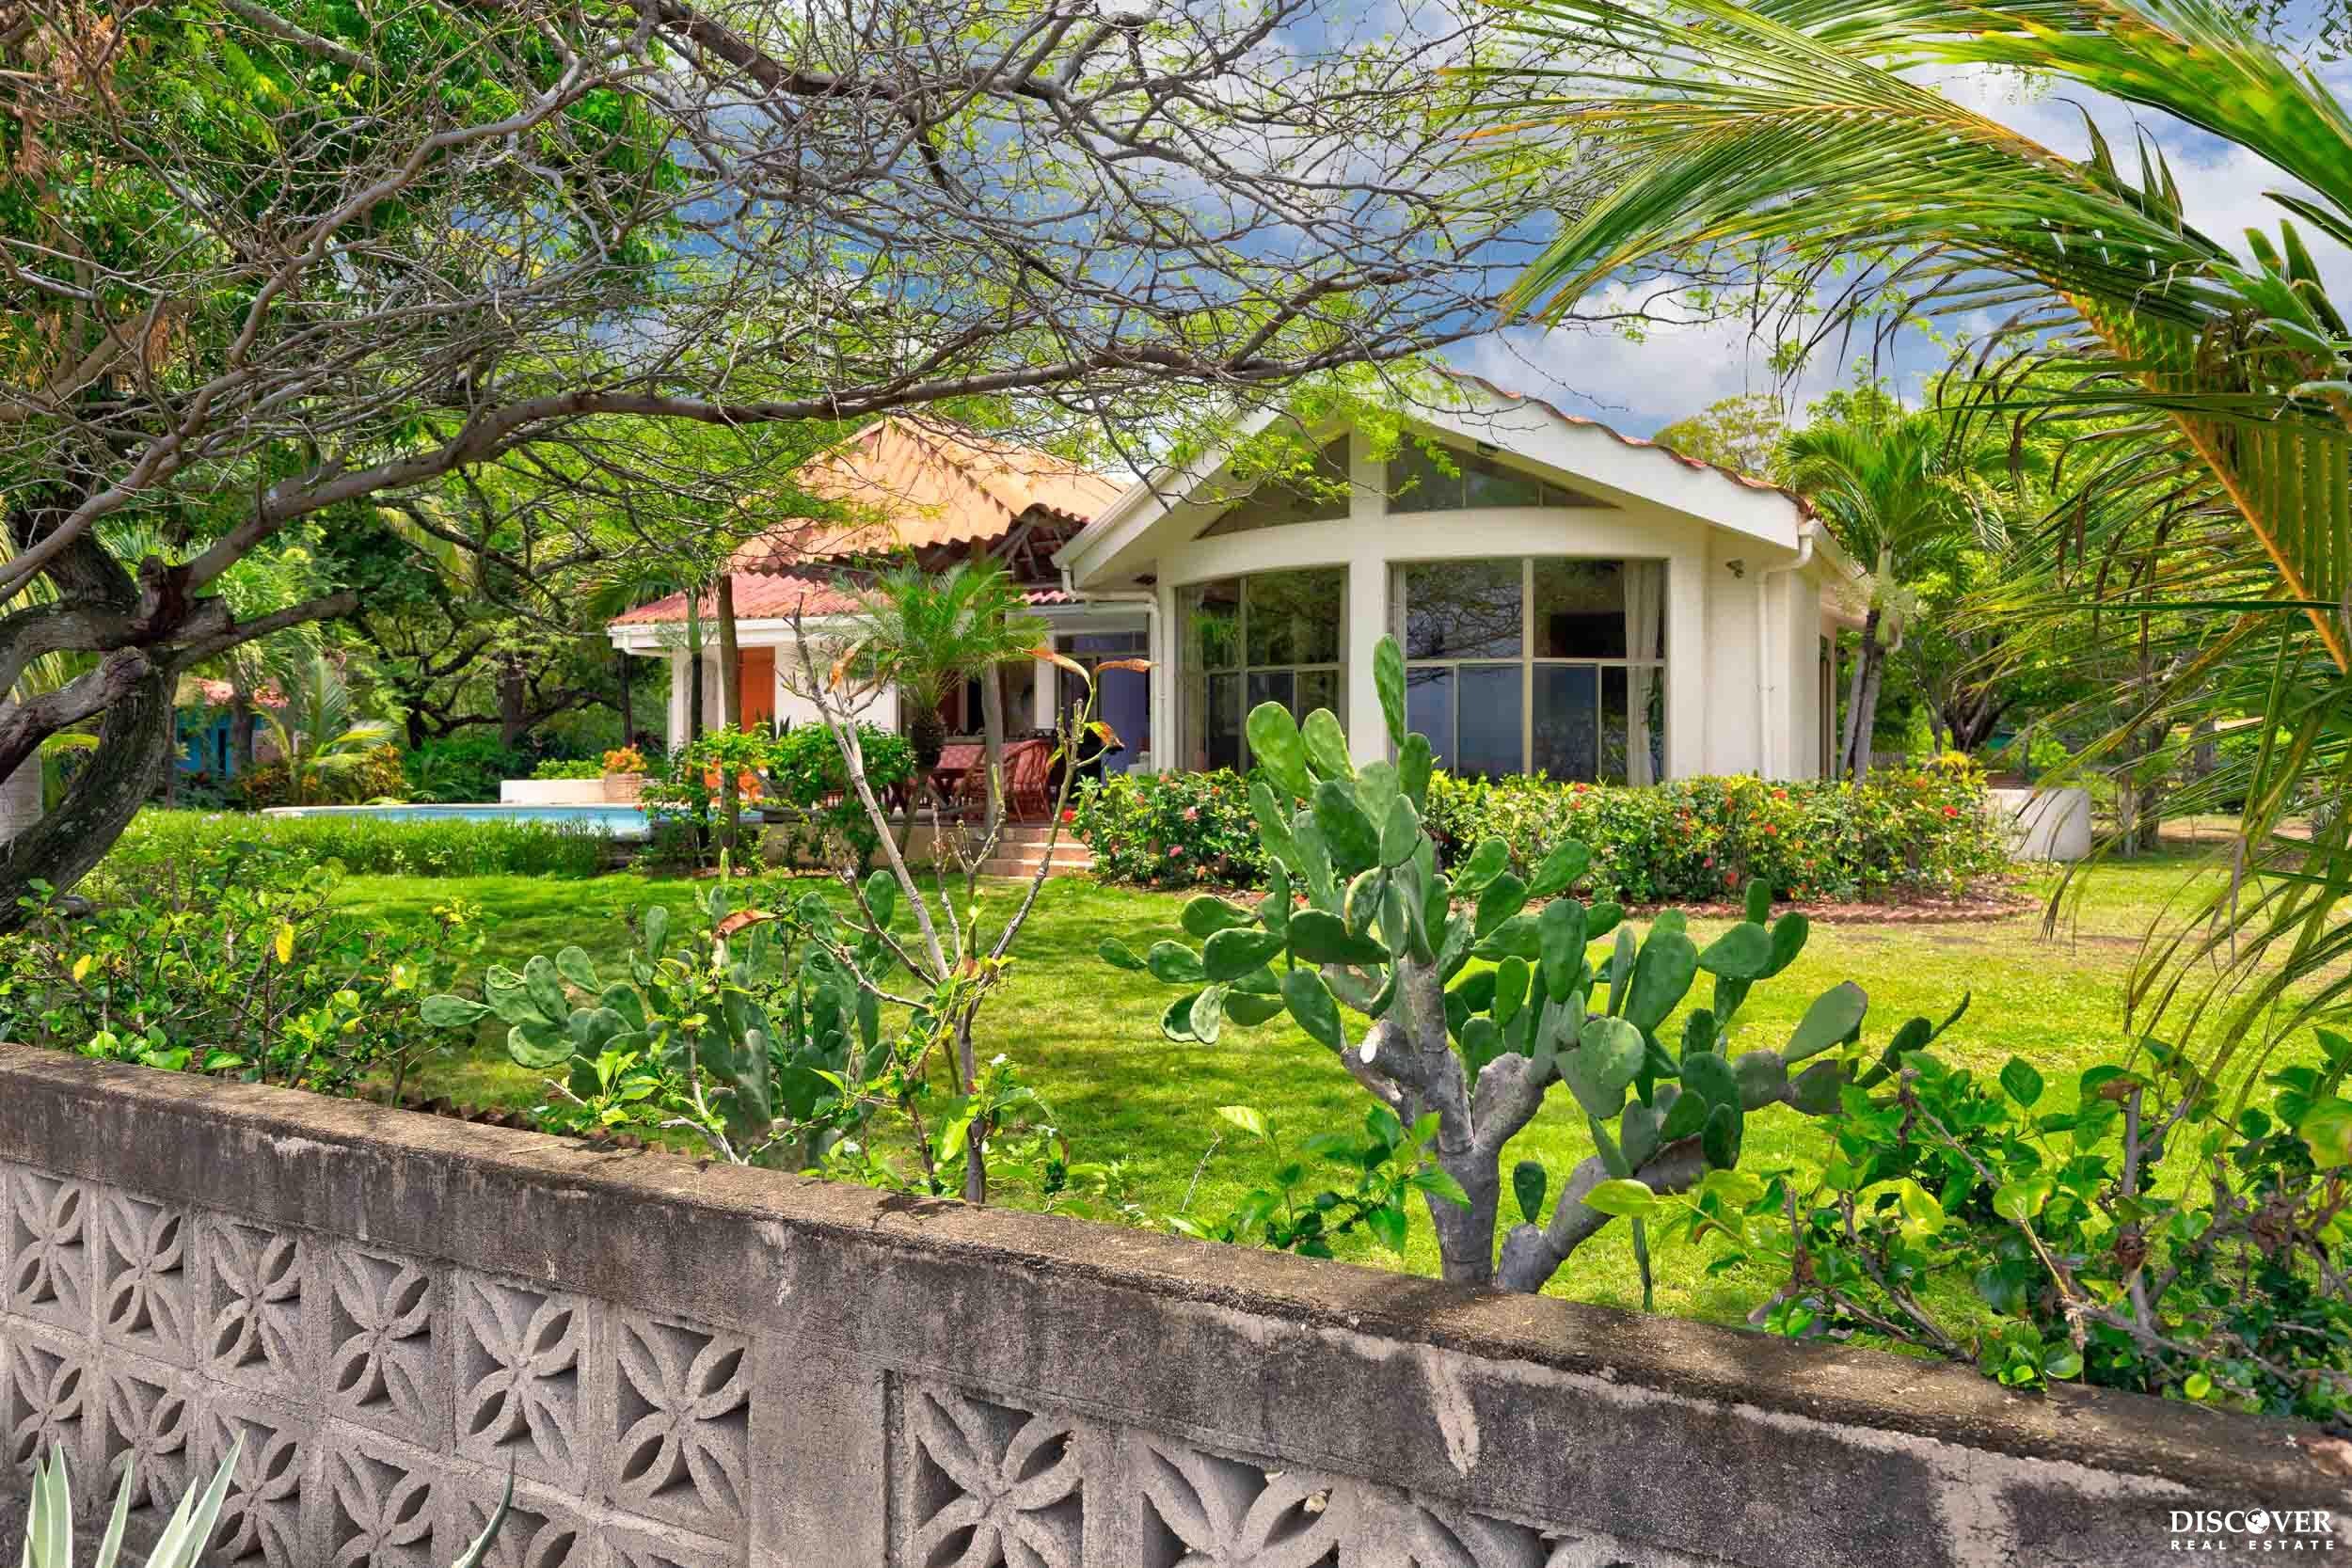 Real Estate for Sale San Juan Del sur Nicaragua November 202121.jpg